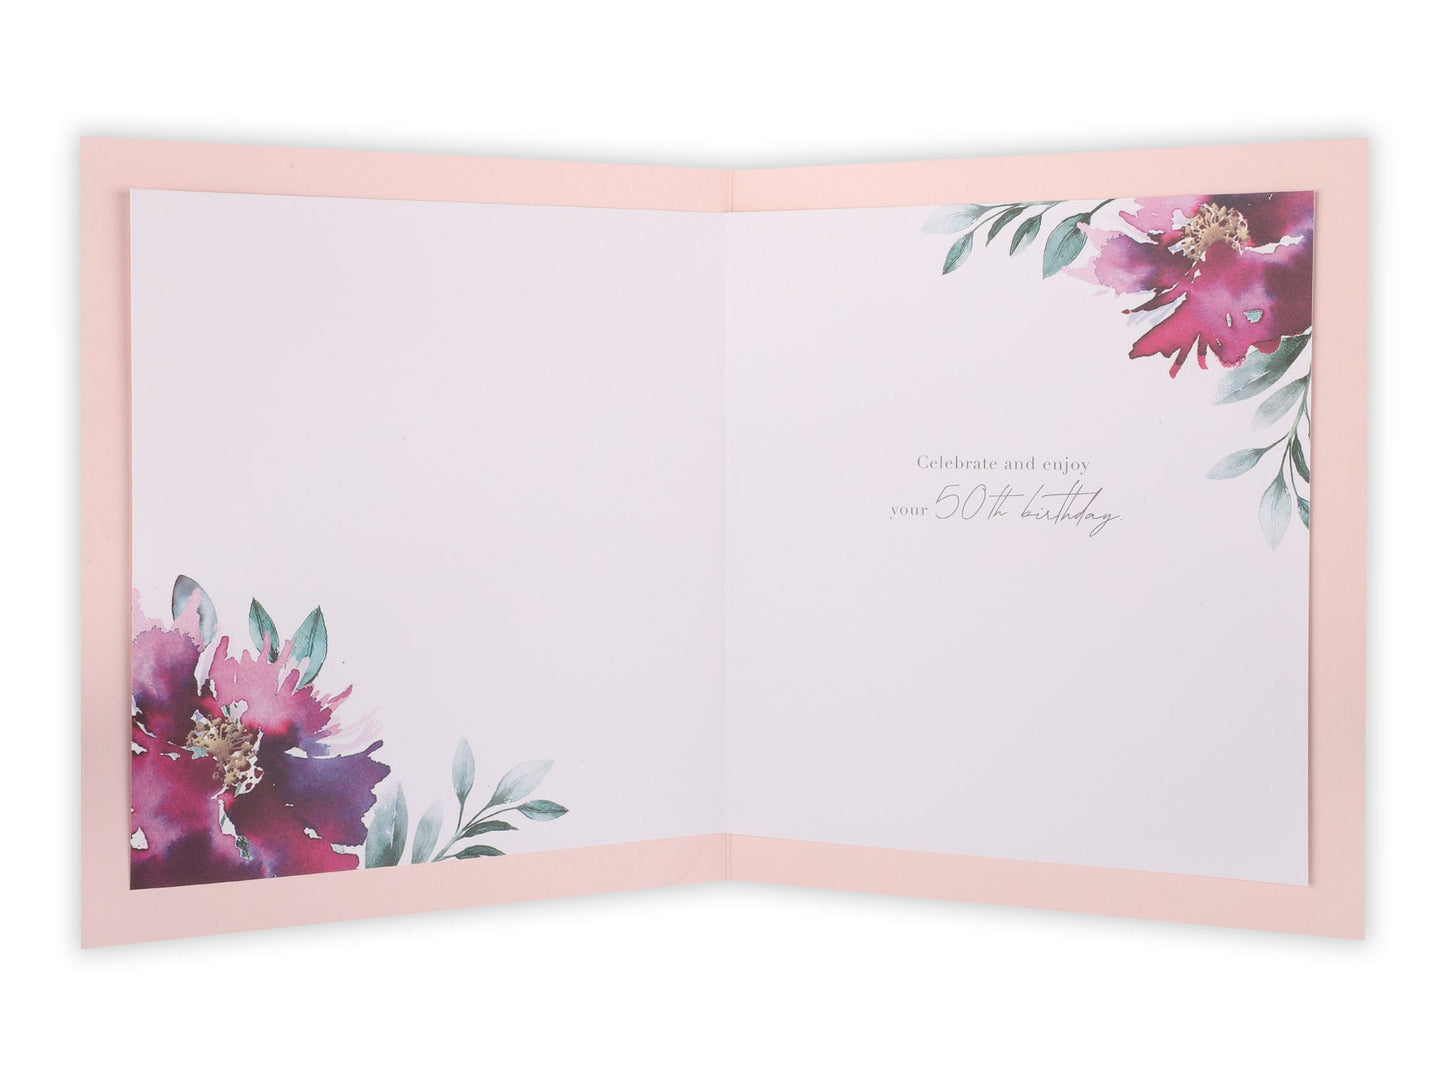 50th Ruby Bloom Birthday Card Pastel Florals